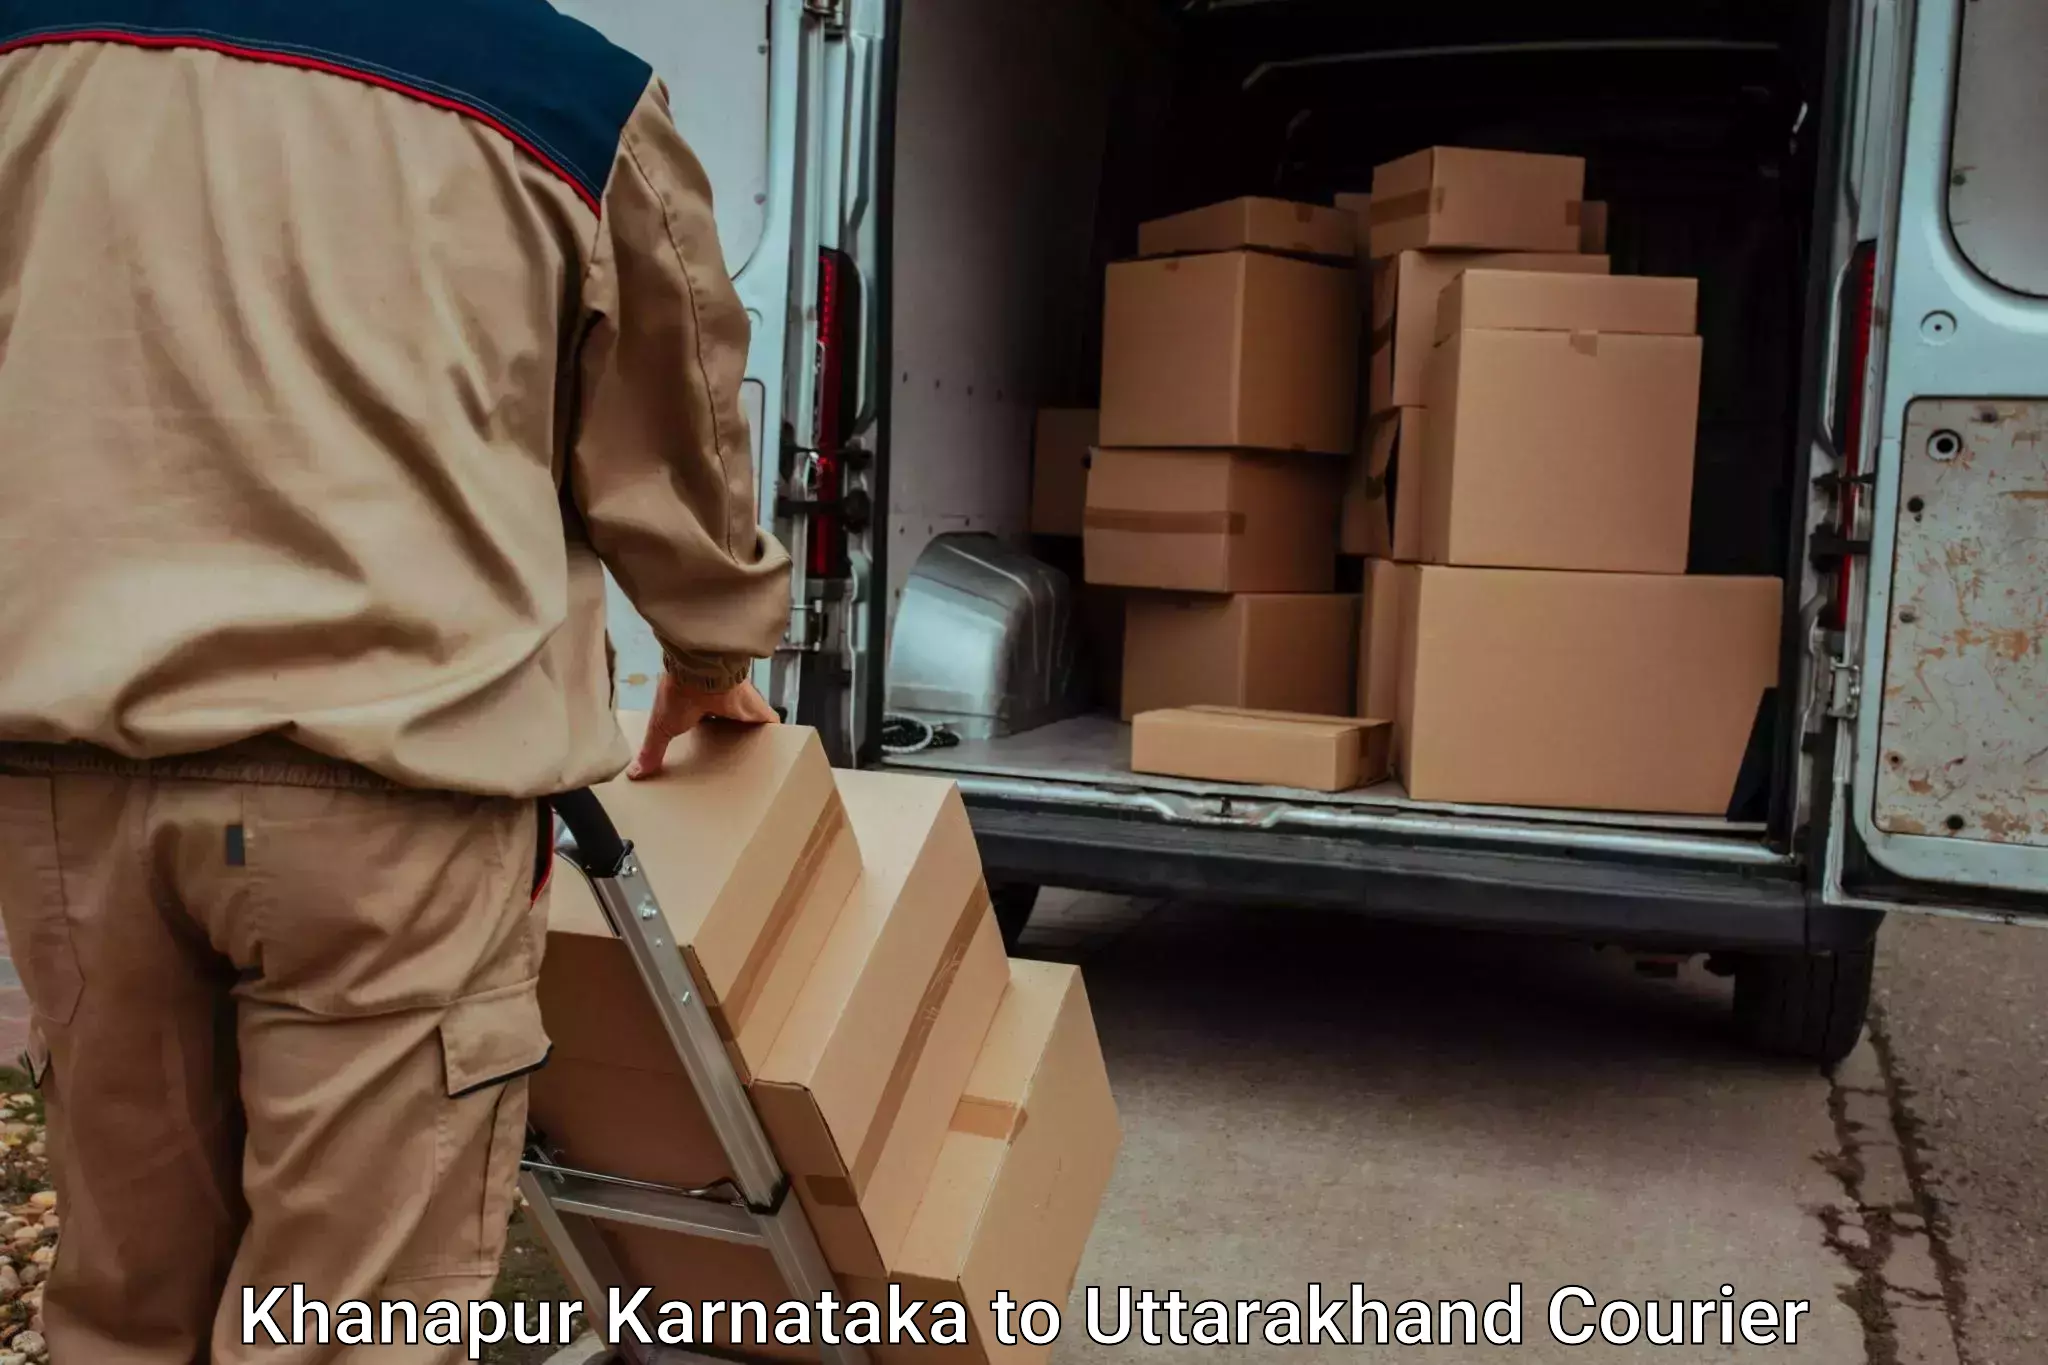 Home goods moving company Khanapur Karnataka to Ranikhet